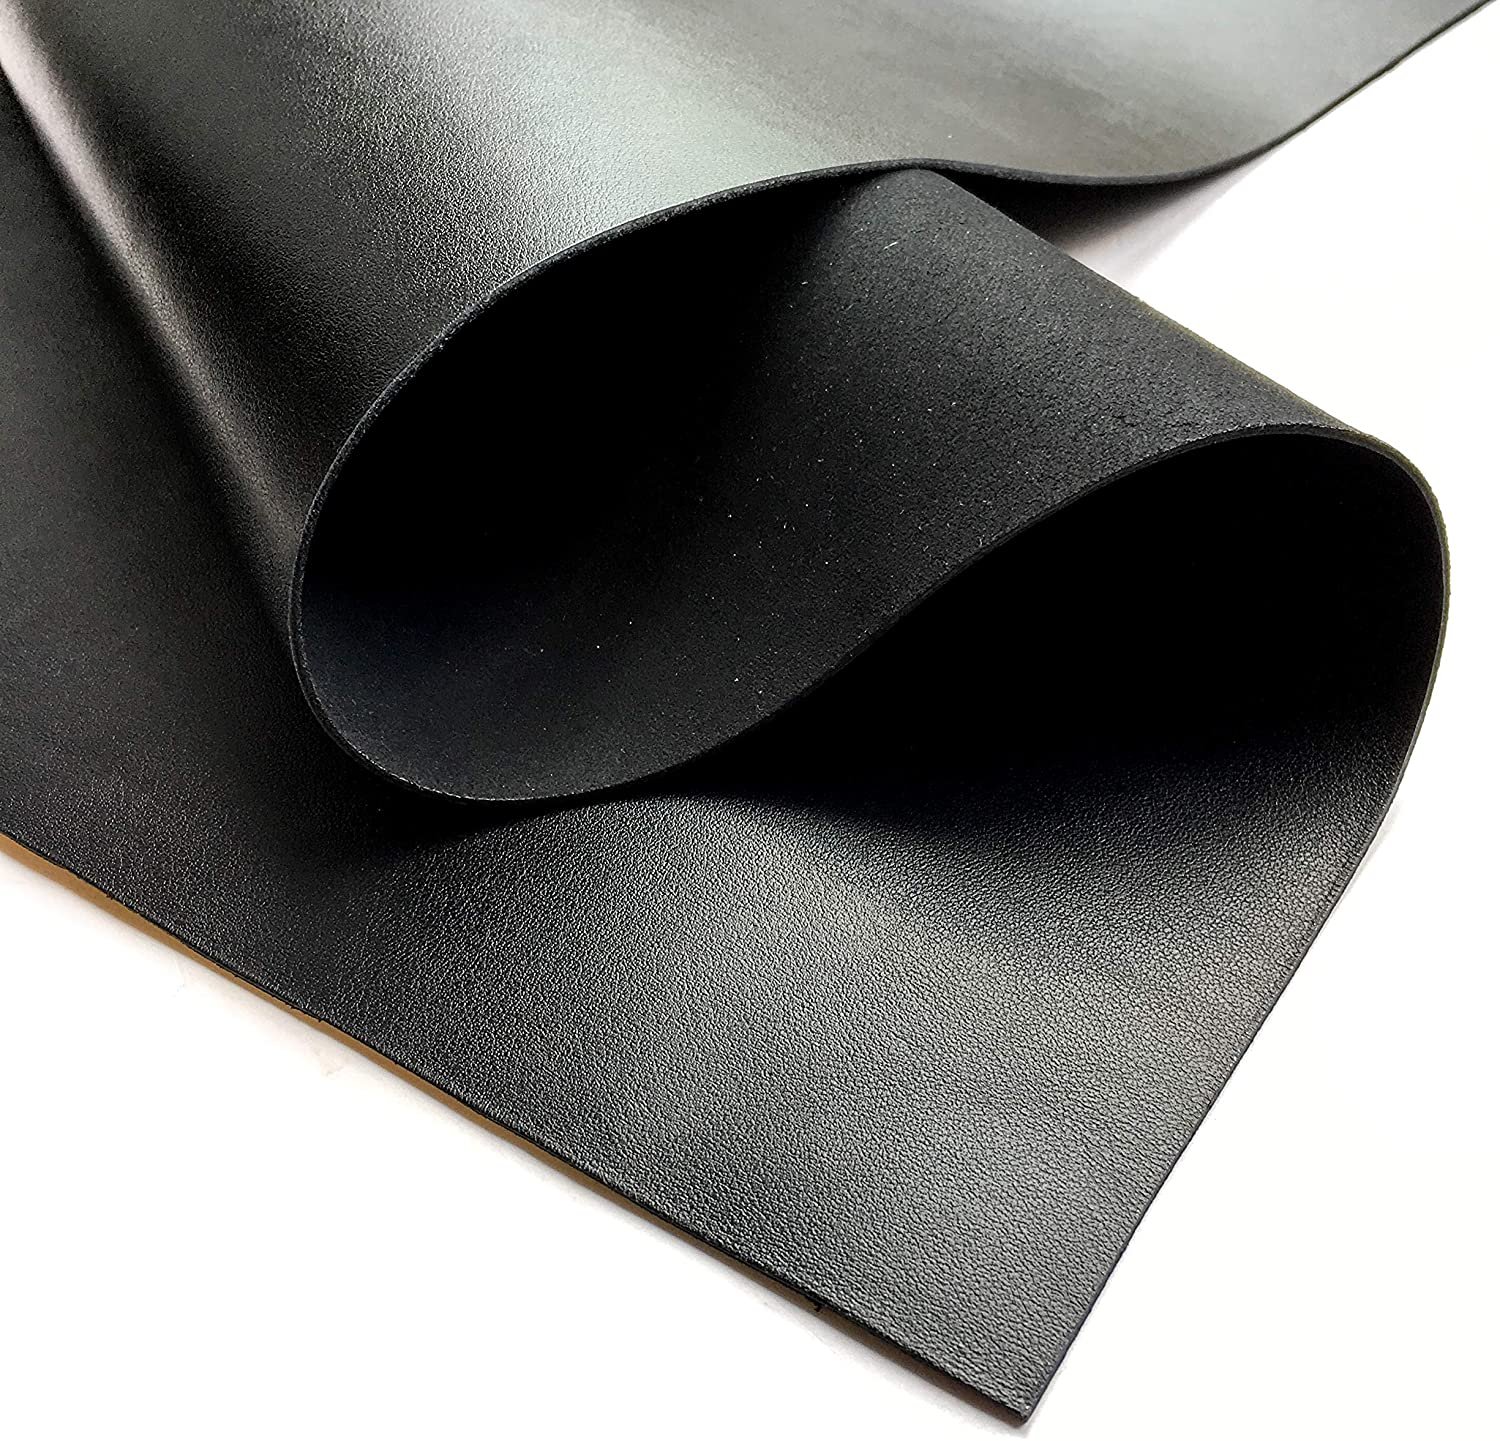 Real Genuine Black Calf Hide Leather: Thick Leather Cow Hide Black Leather  Sheets for Crafting and Cricut Maker Supplies Black, 12x24In/ 30x60cm 